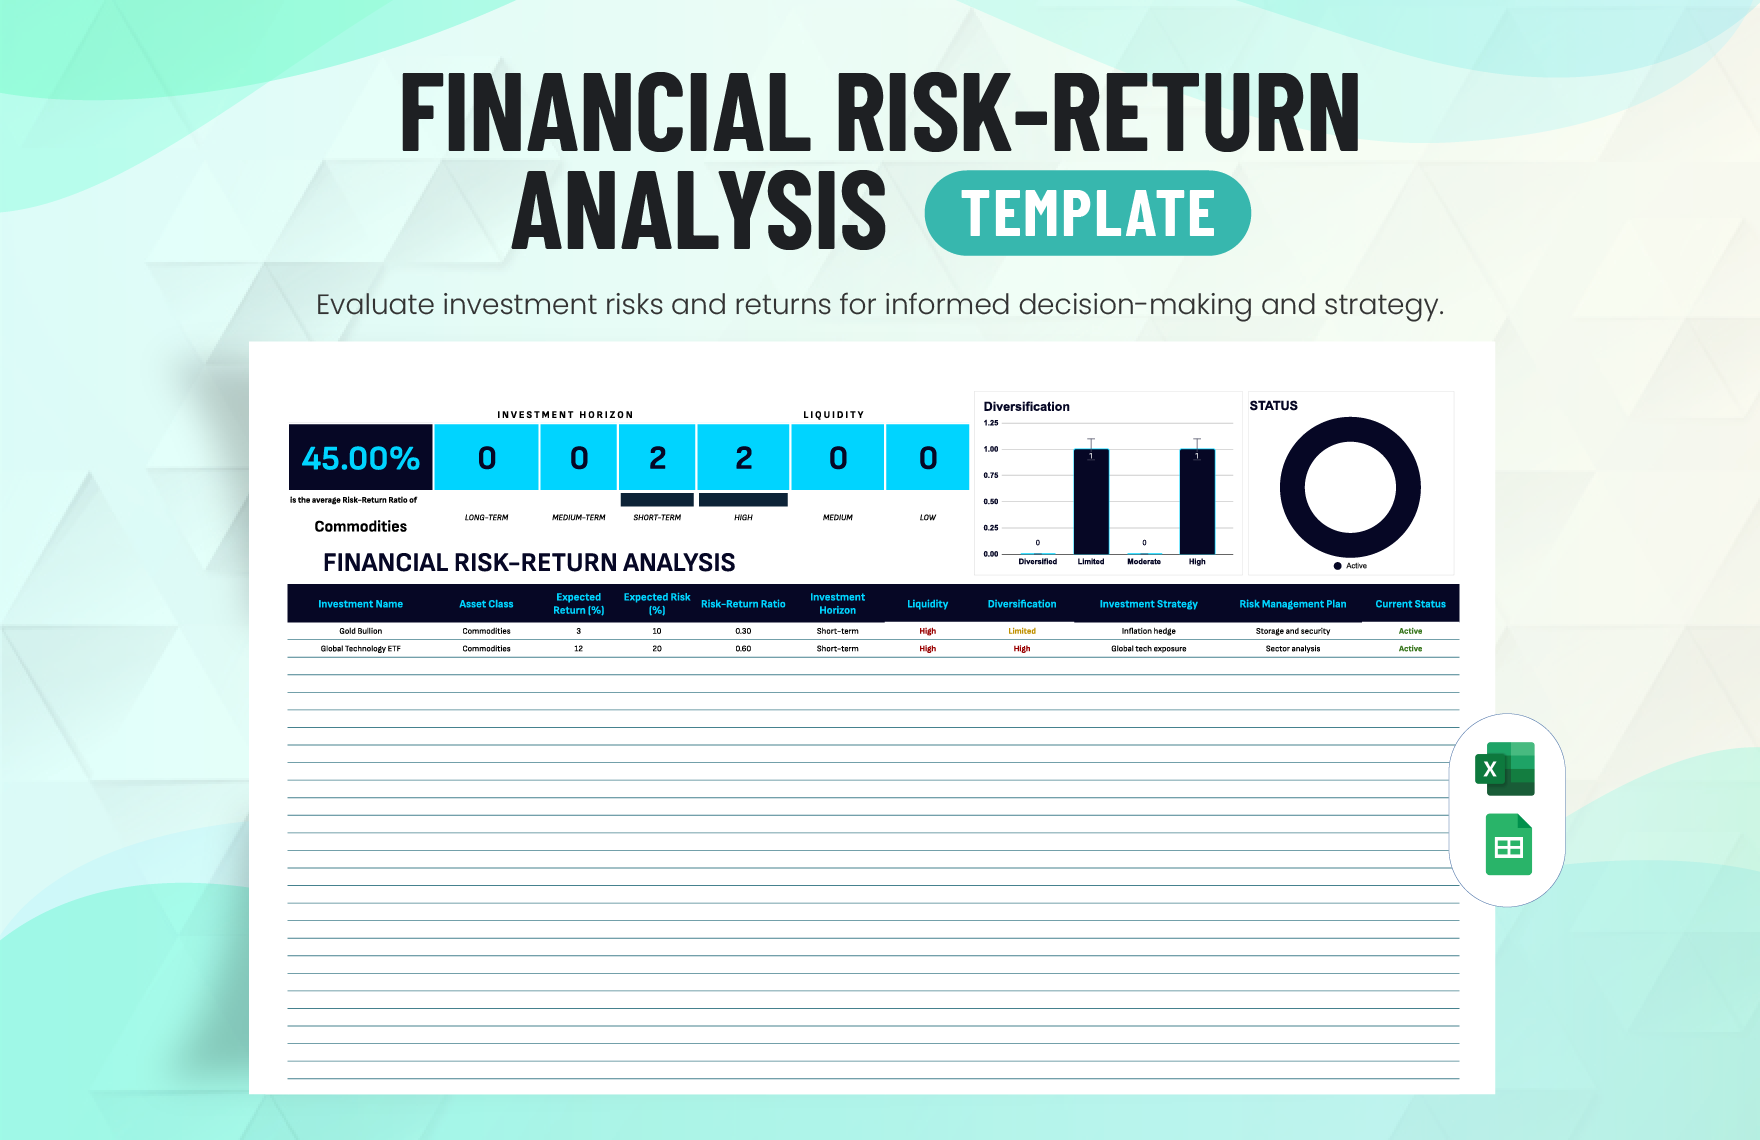 Financial Risk-Return Analysis Template